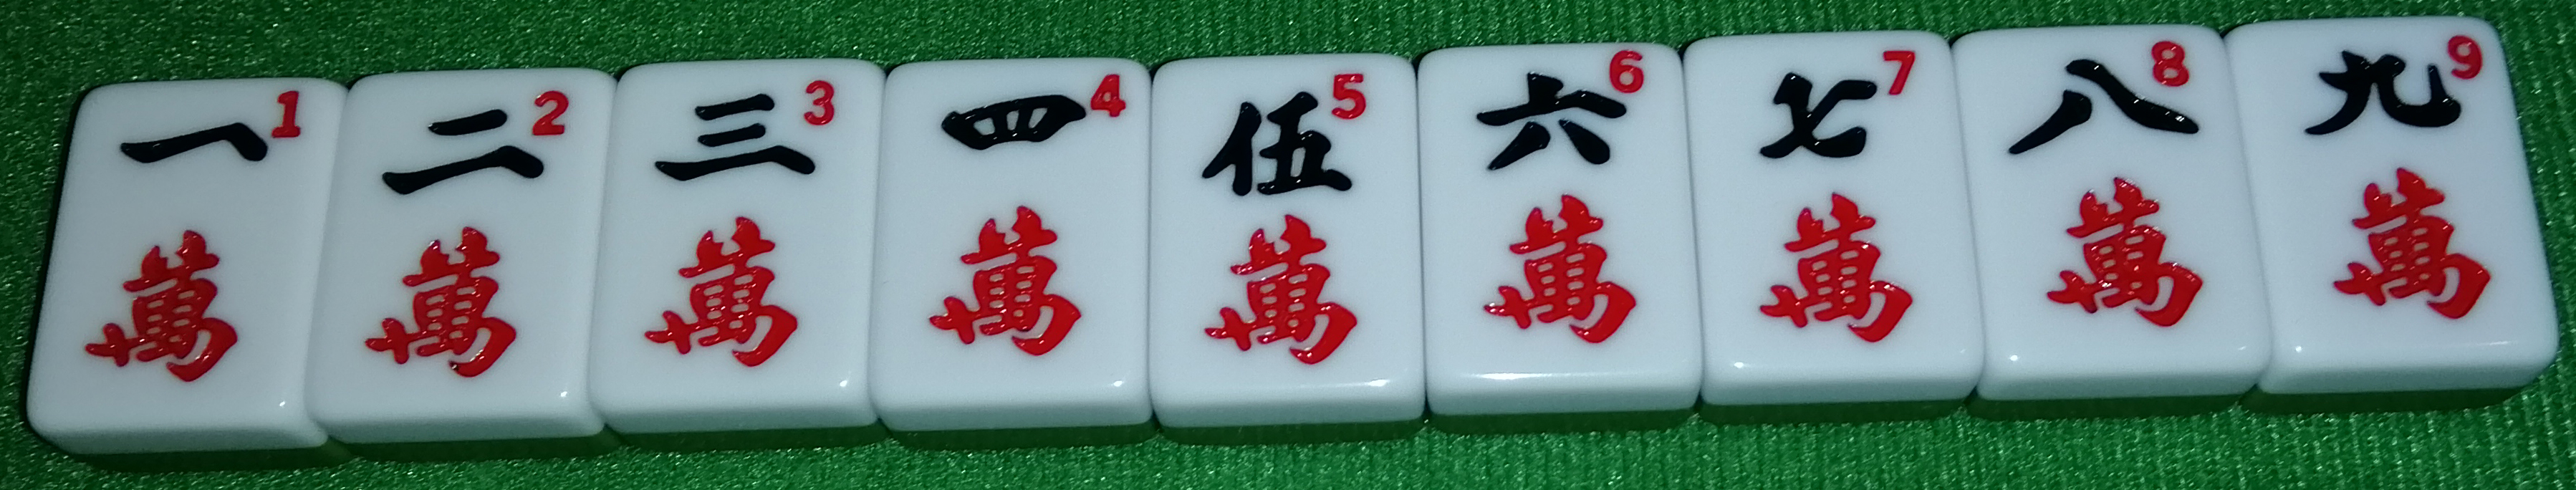 Nine wan tiles, numbered one through nine.